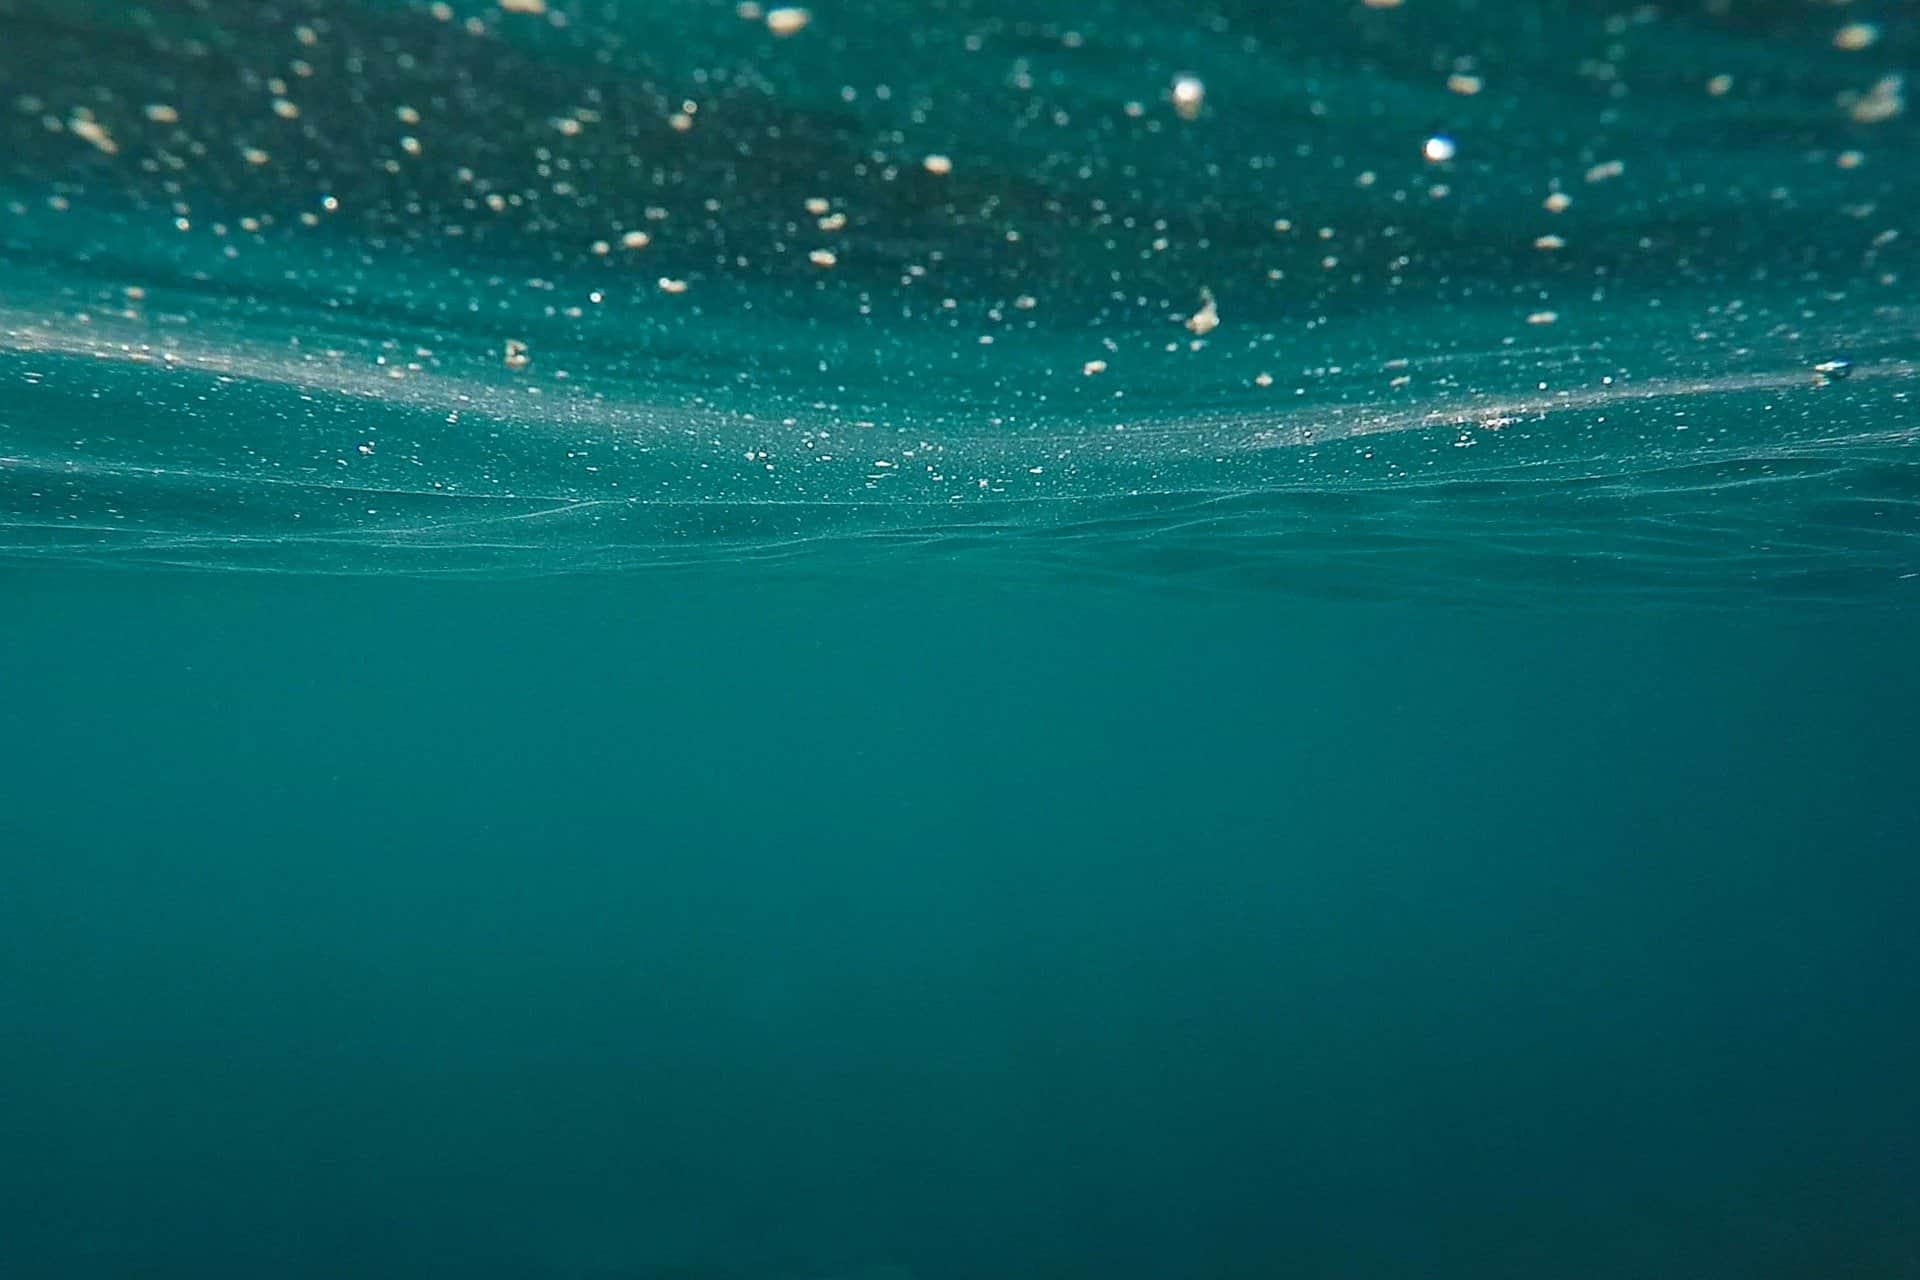 ocean background image of water